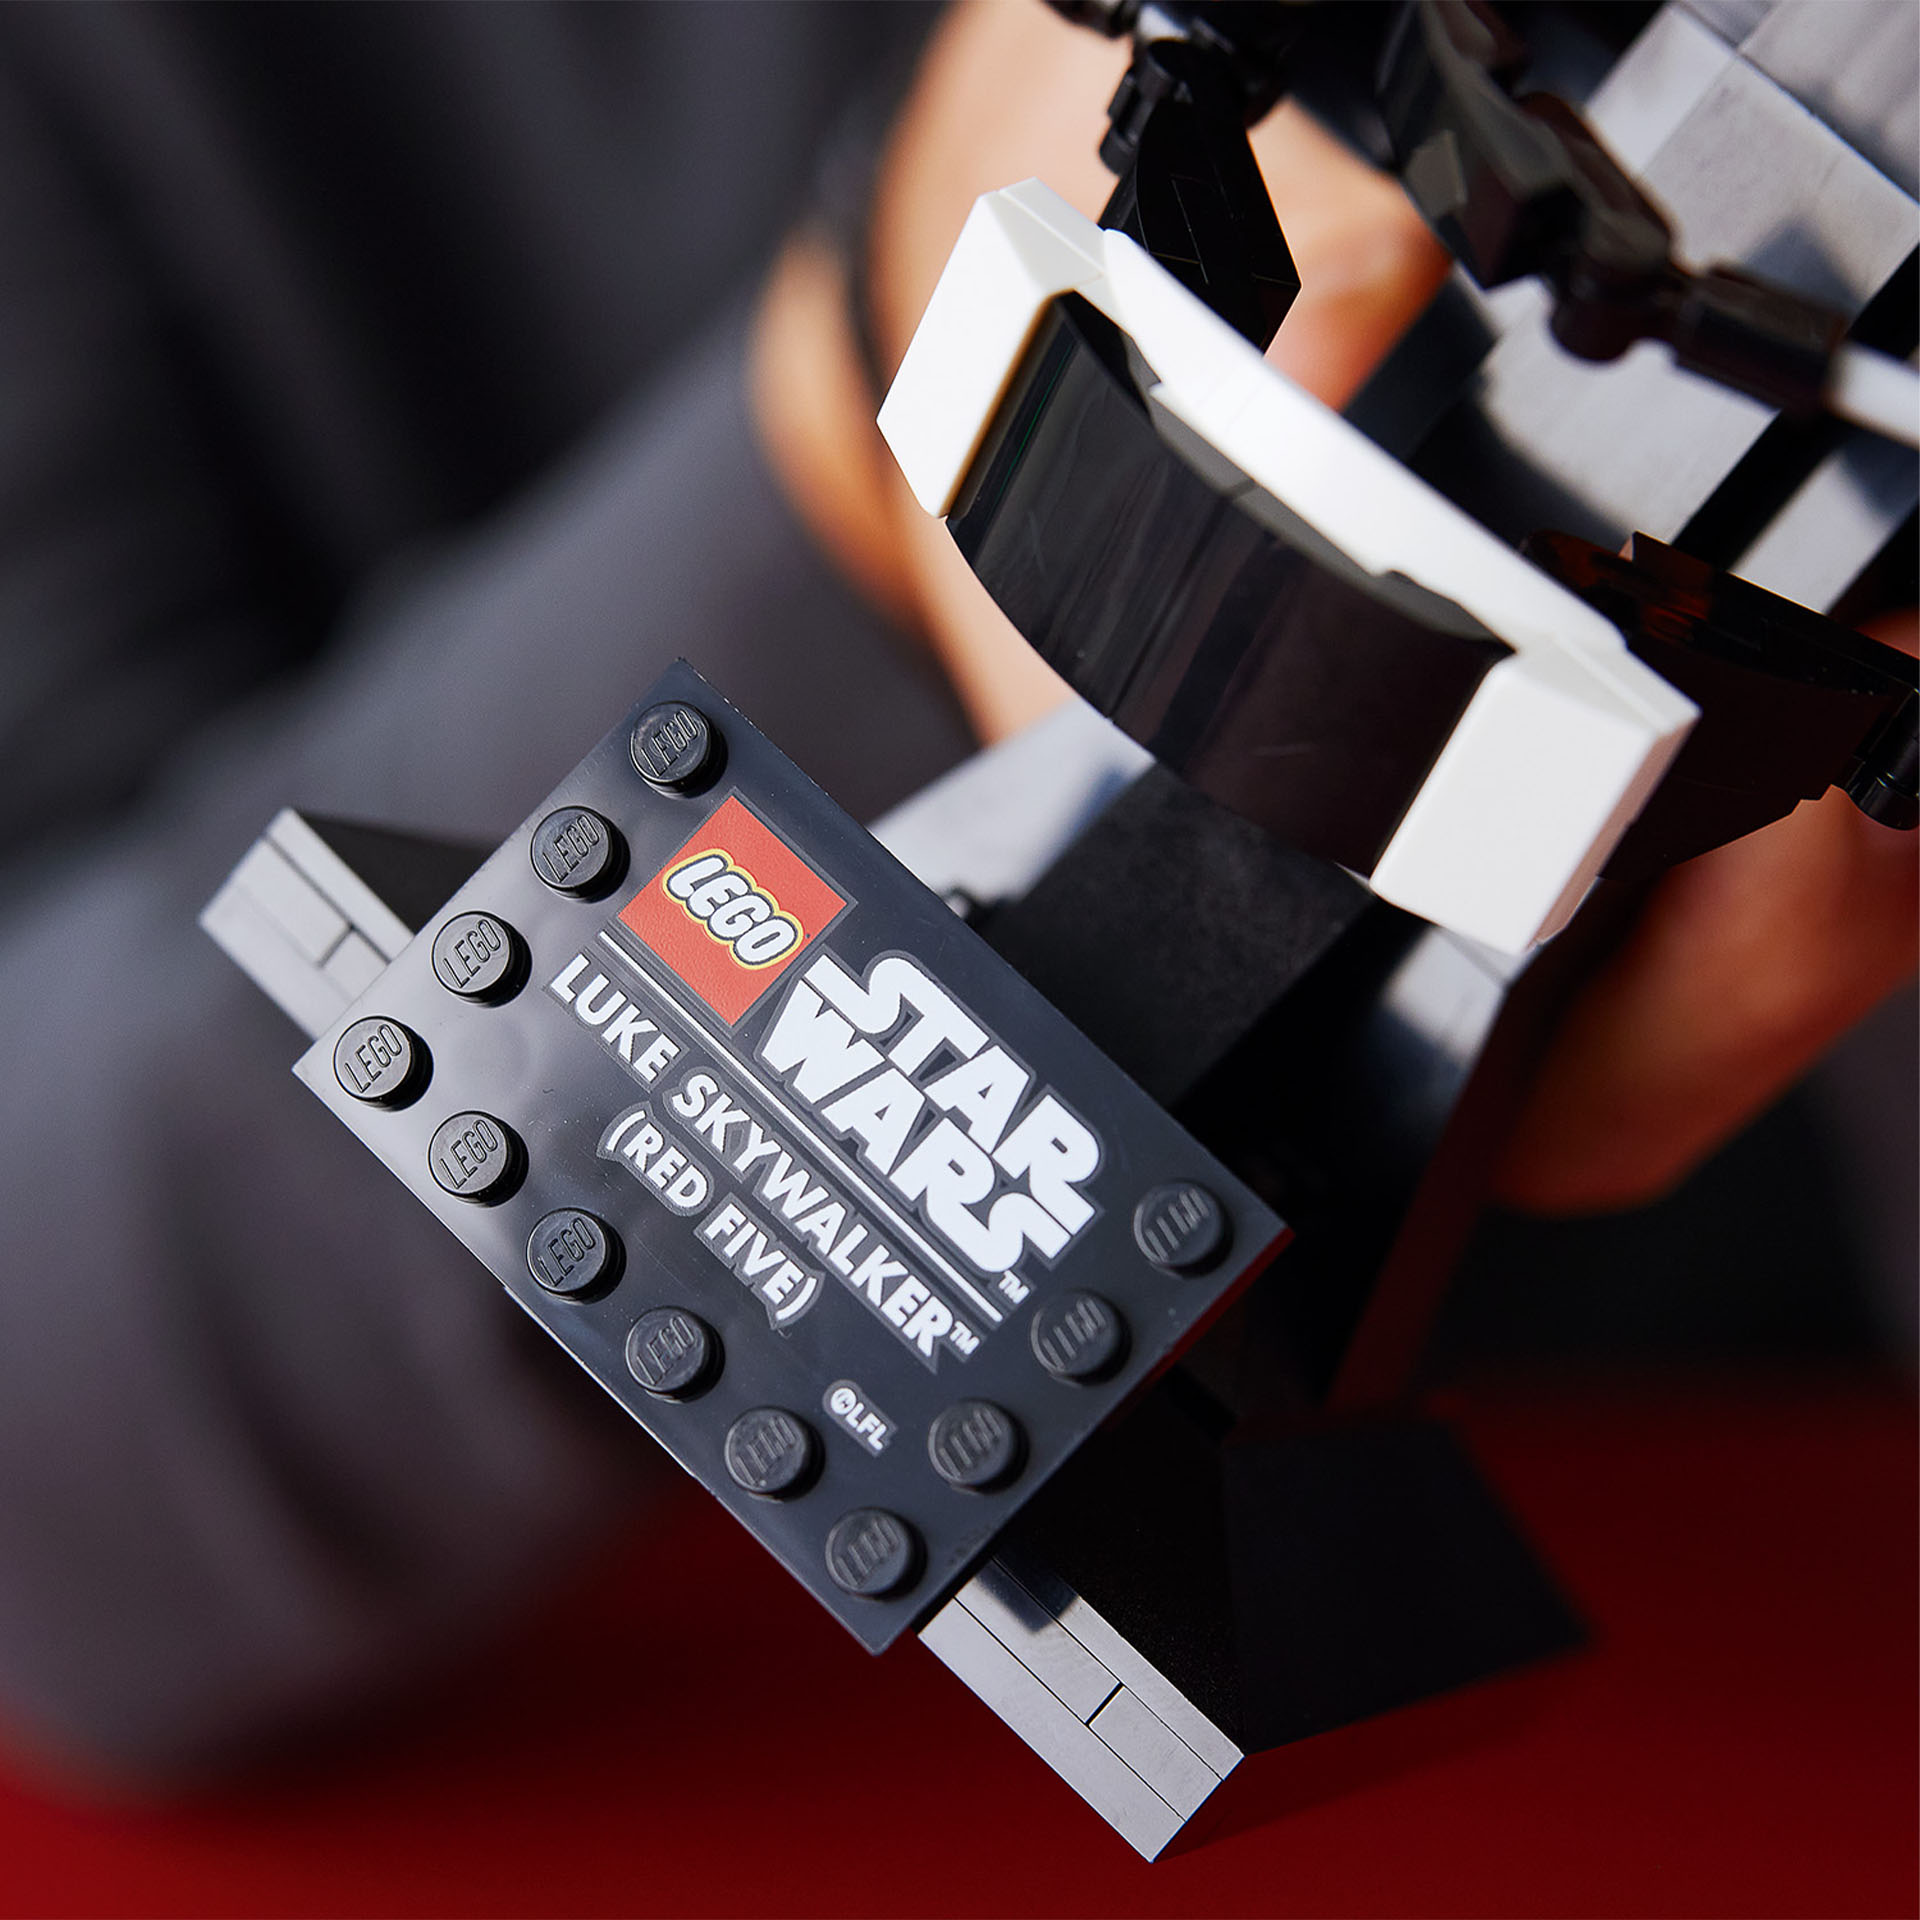 LEGO Star Wars Casco di Luke Skywalker (Red Five), Elmo da Collezione, Regalo pe 75327, , large